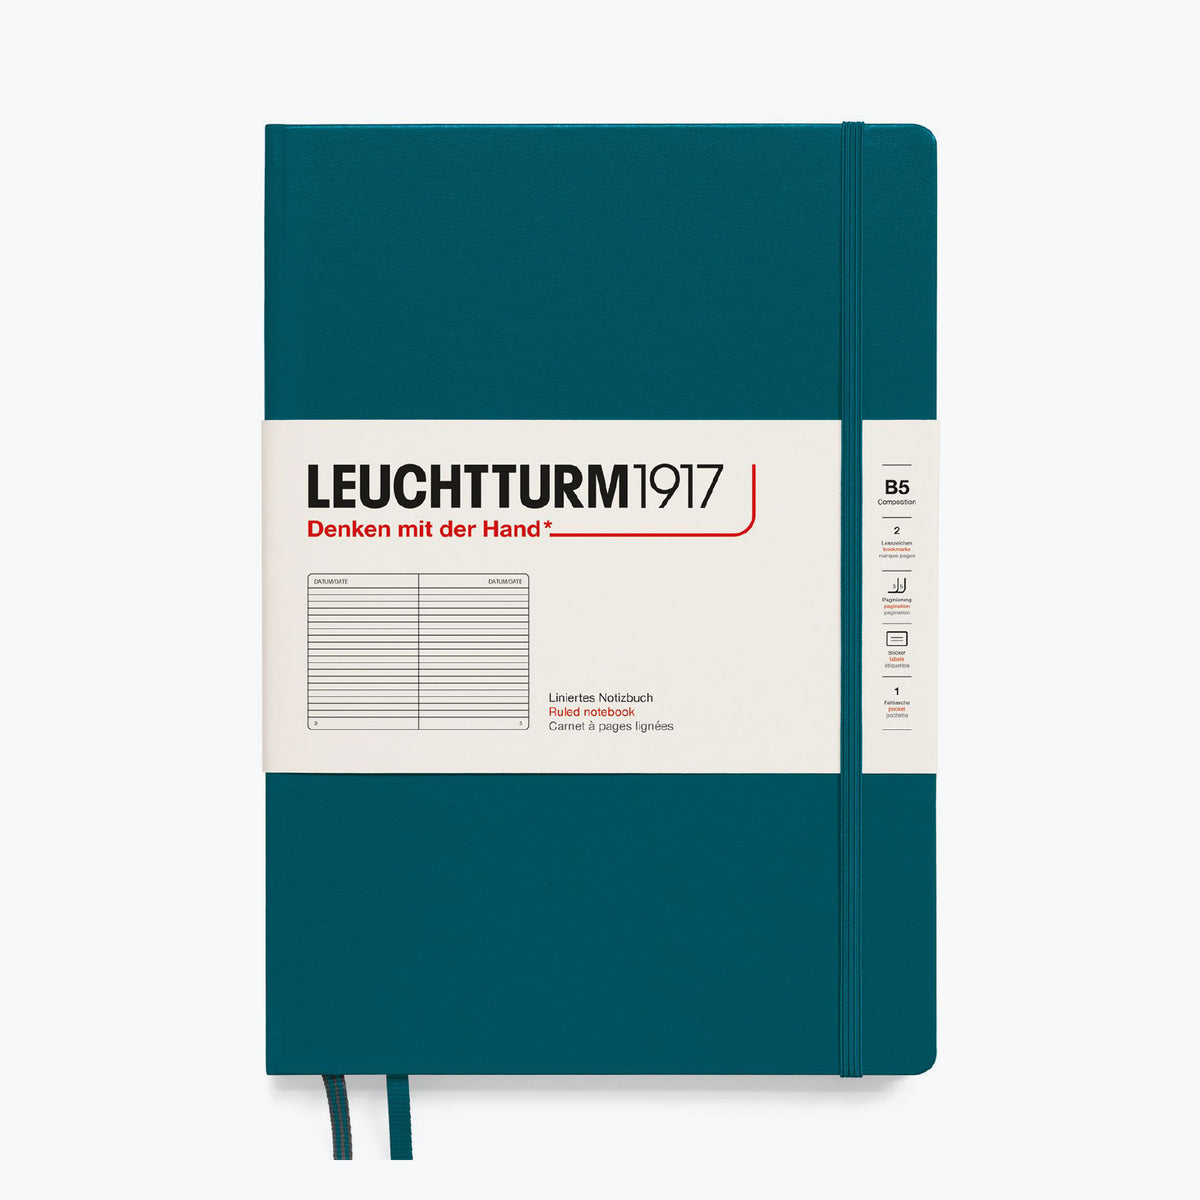 Leuchtturm1917 - Notebook - Hardcover - B5 - Pacific Green <Outgoing>